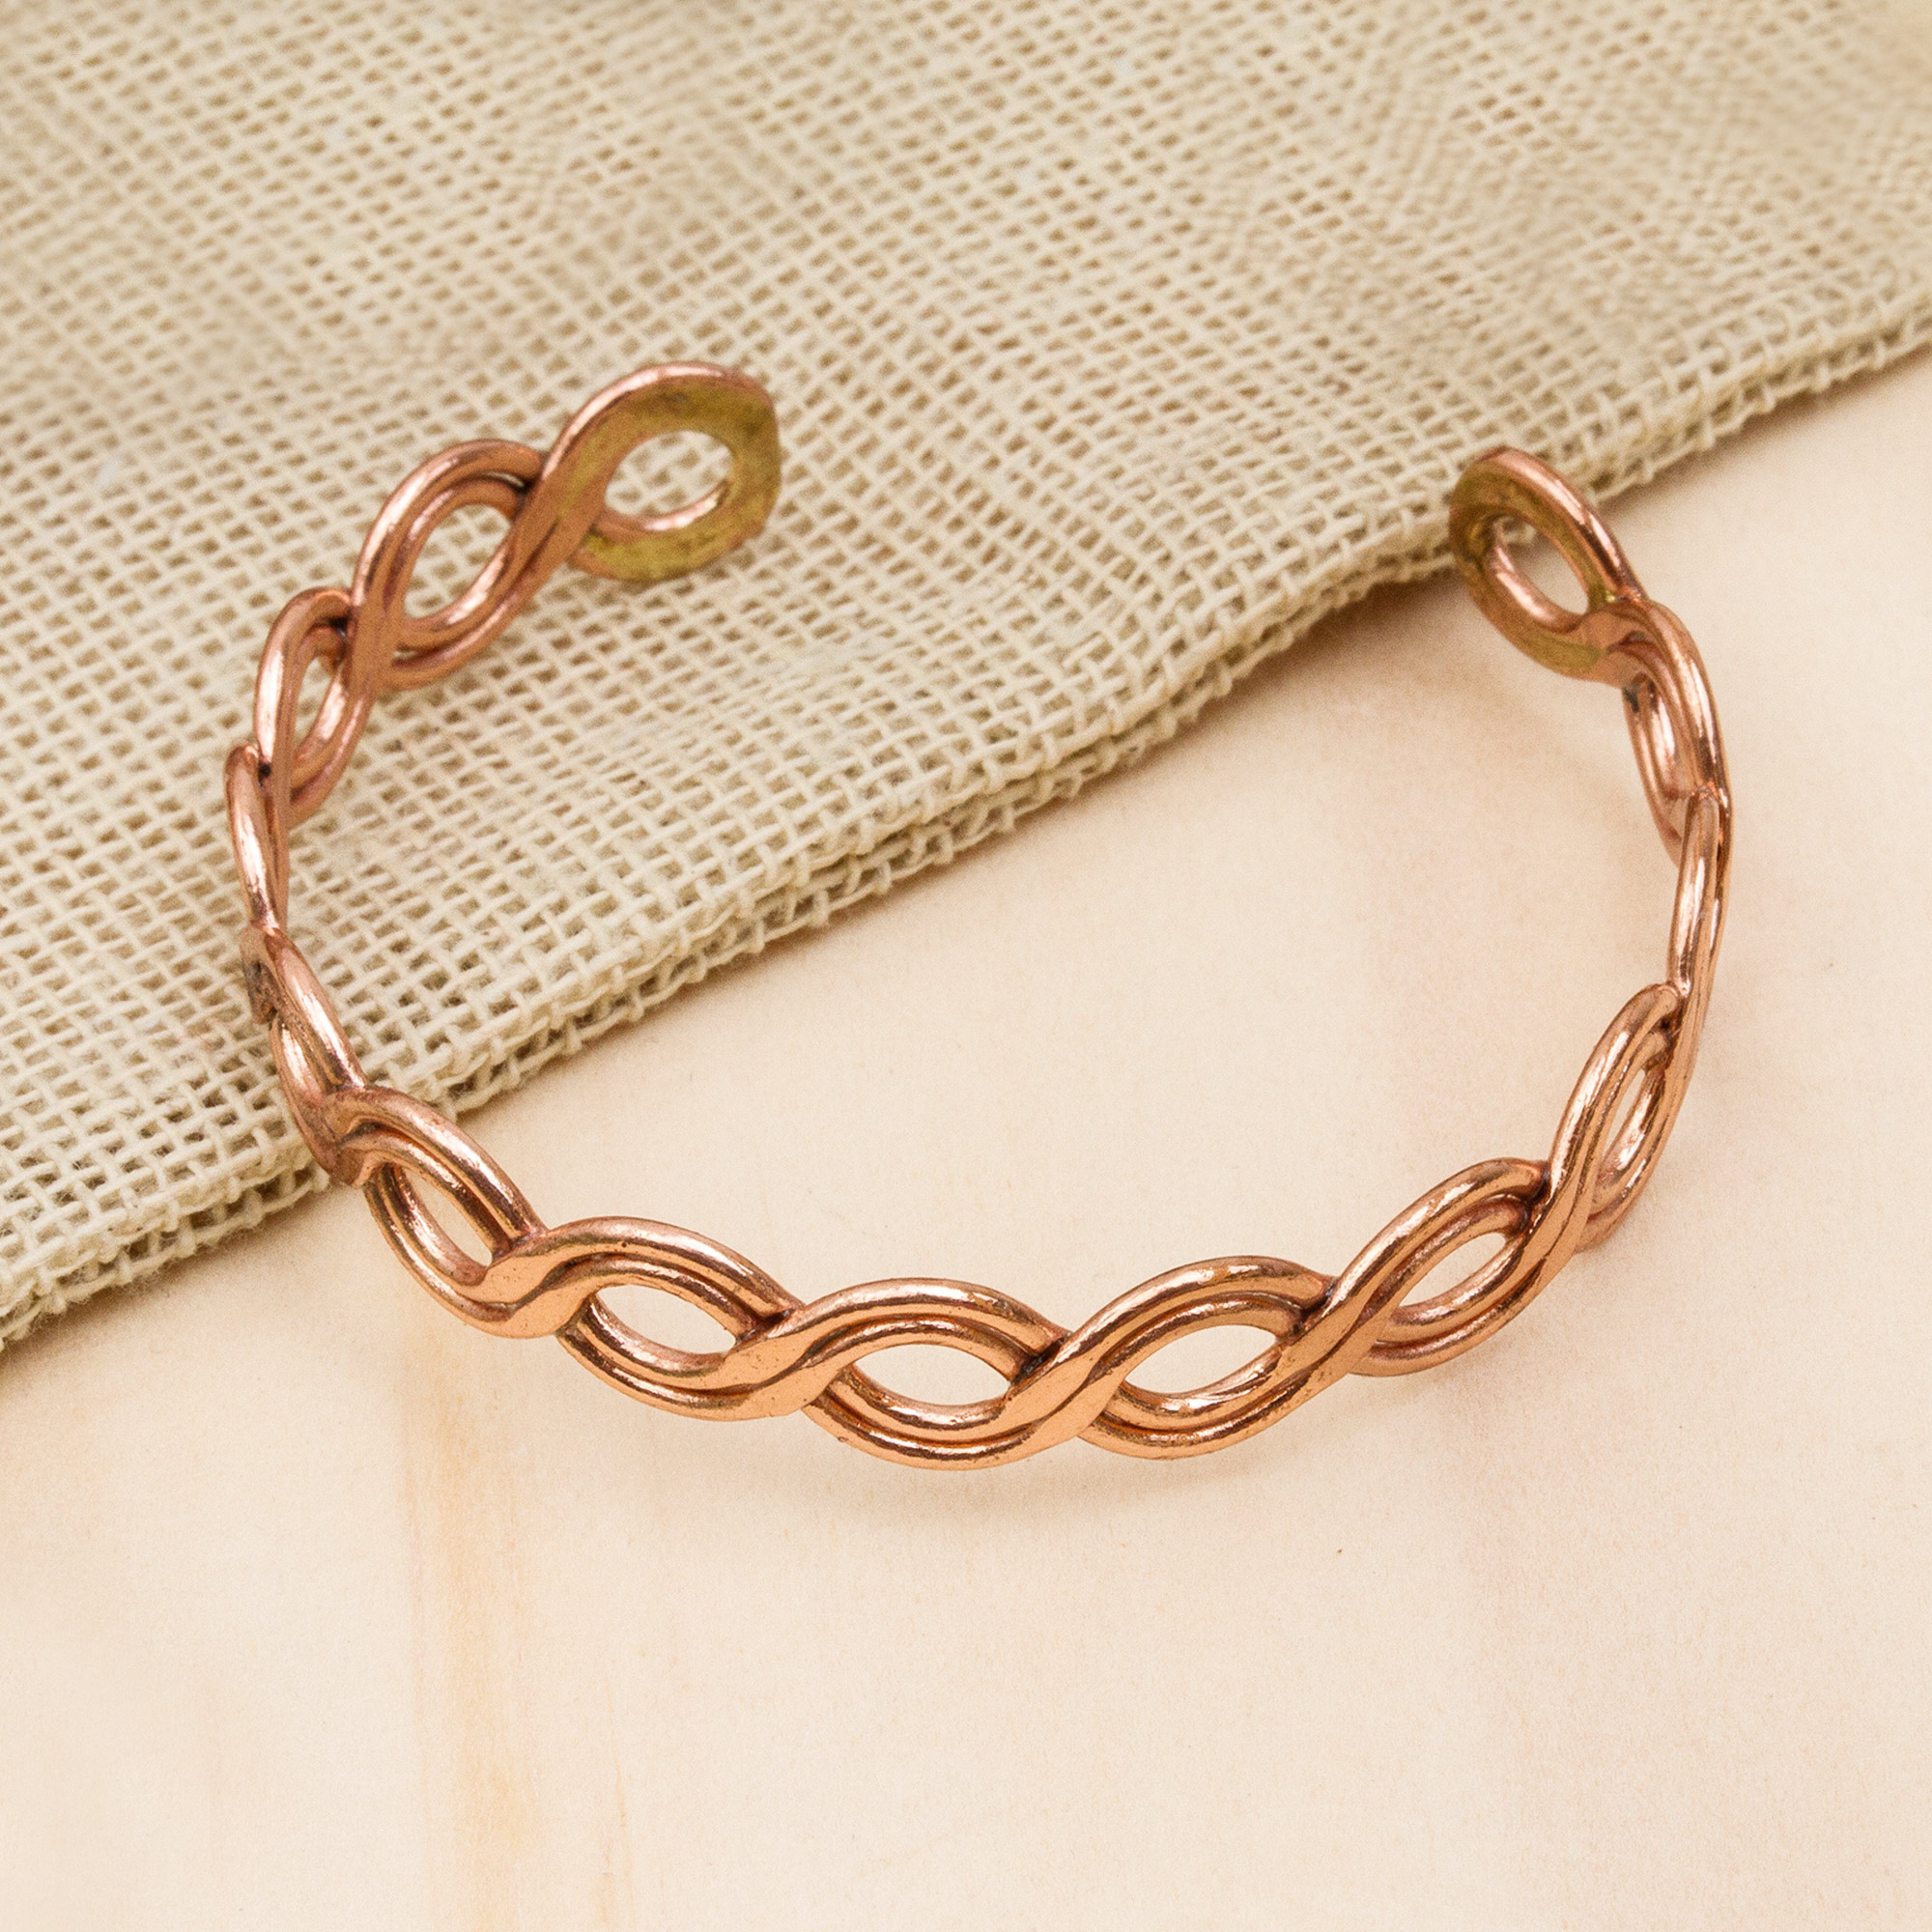 Weave Motif Copper Cuff Bracelet from Mexico, 'Brilliant Beauty'